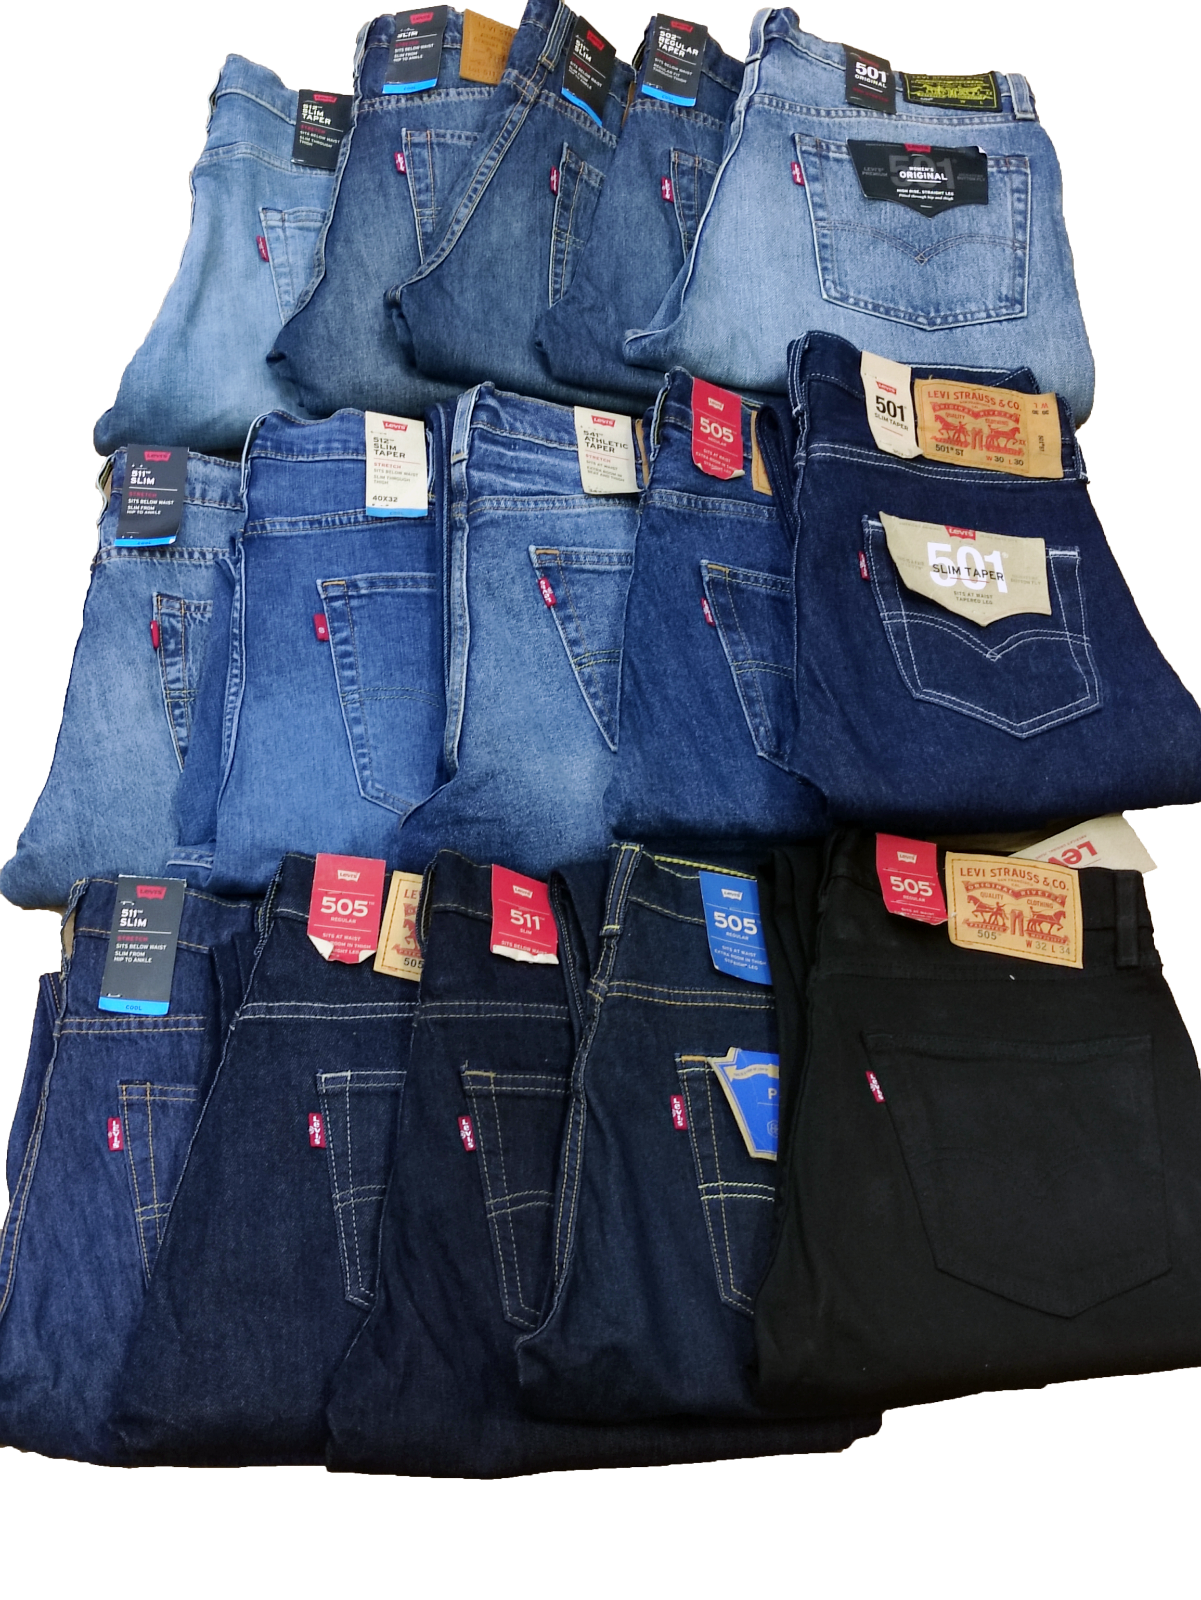 LEVI’s 501 502 505 Popular brand 511 512 W2 Menapos;s 541 Boston Mall Jeans Vintage